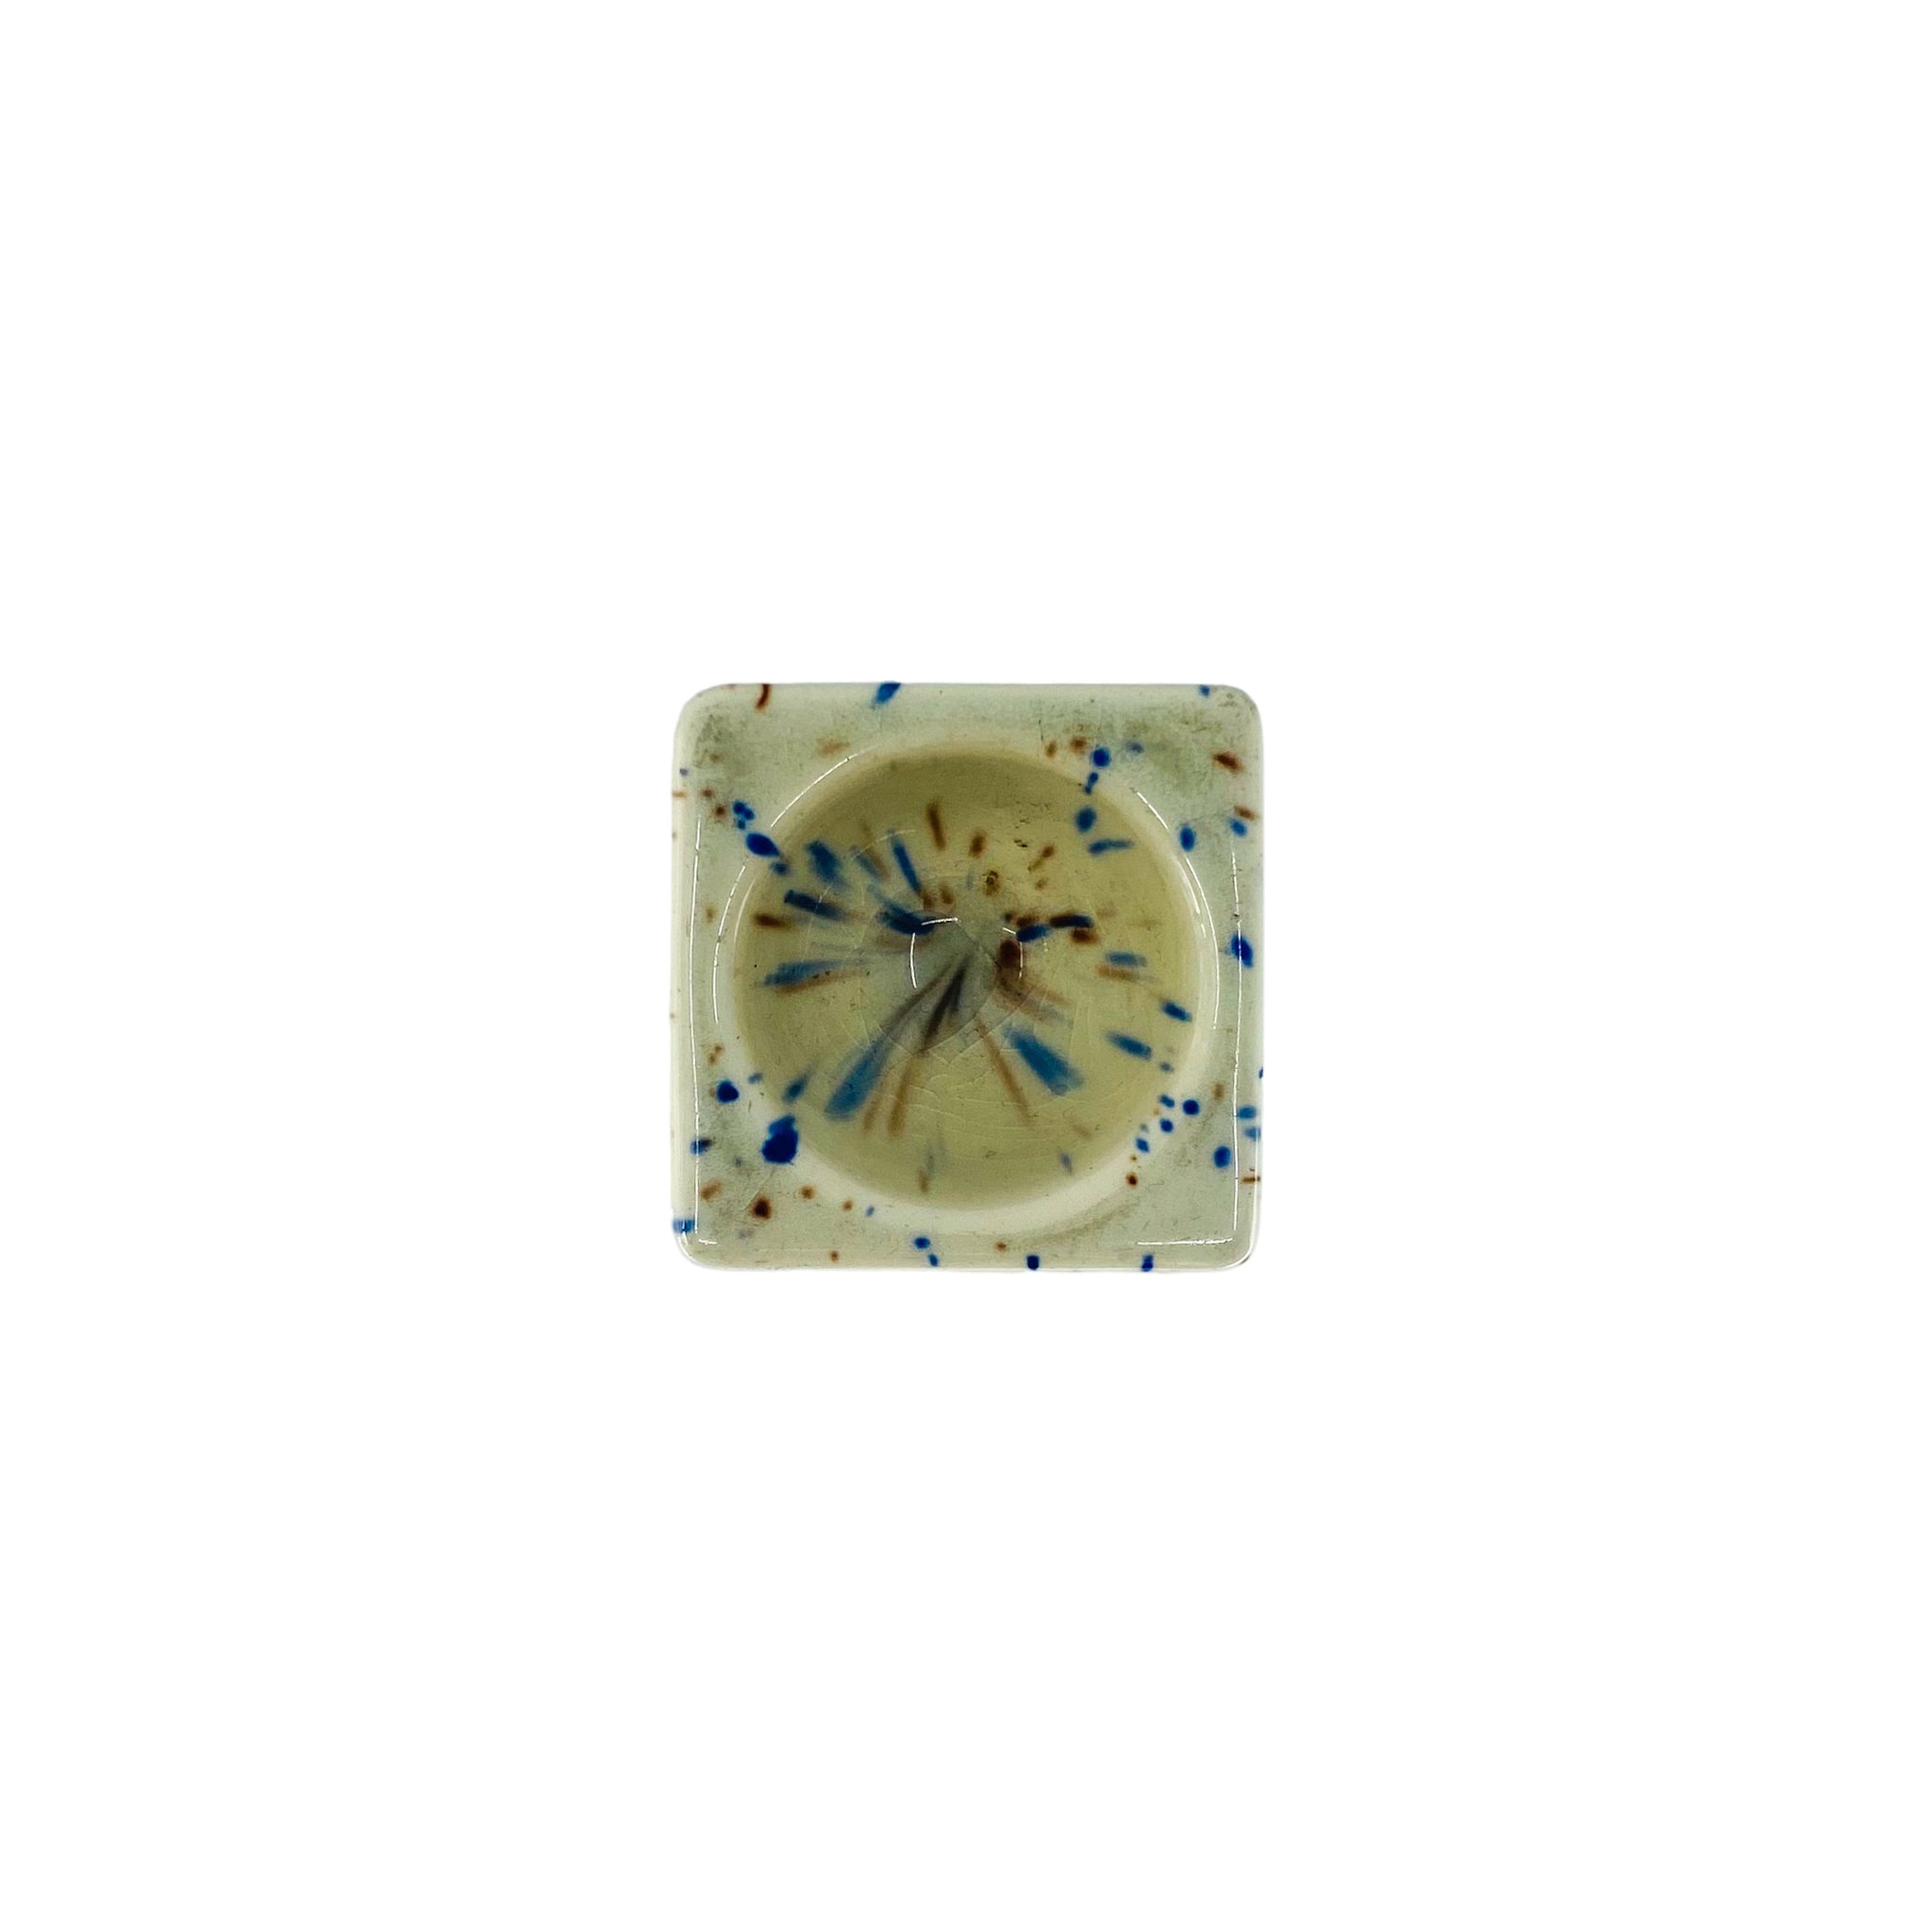 Vintage Speckled Ceramic Square Ring Drop, Germany